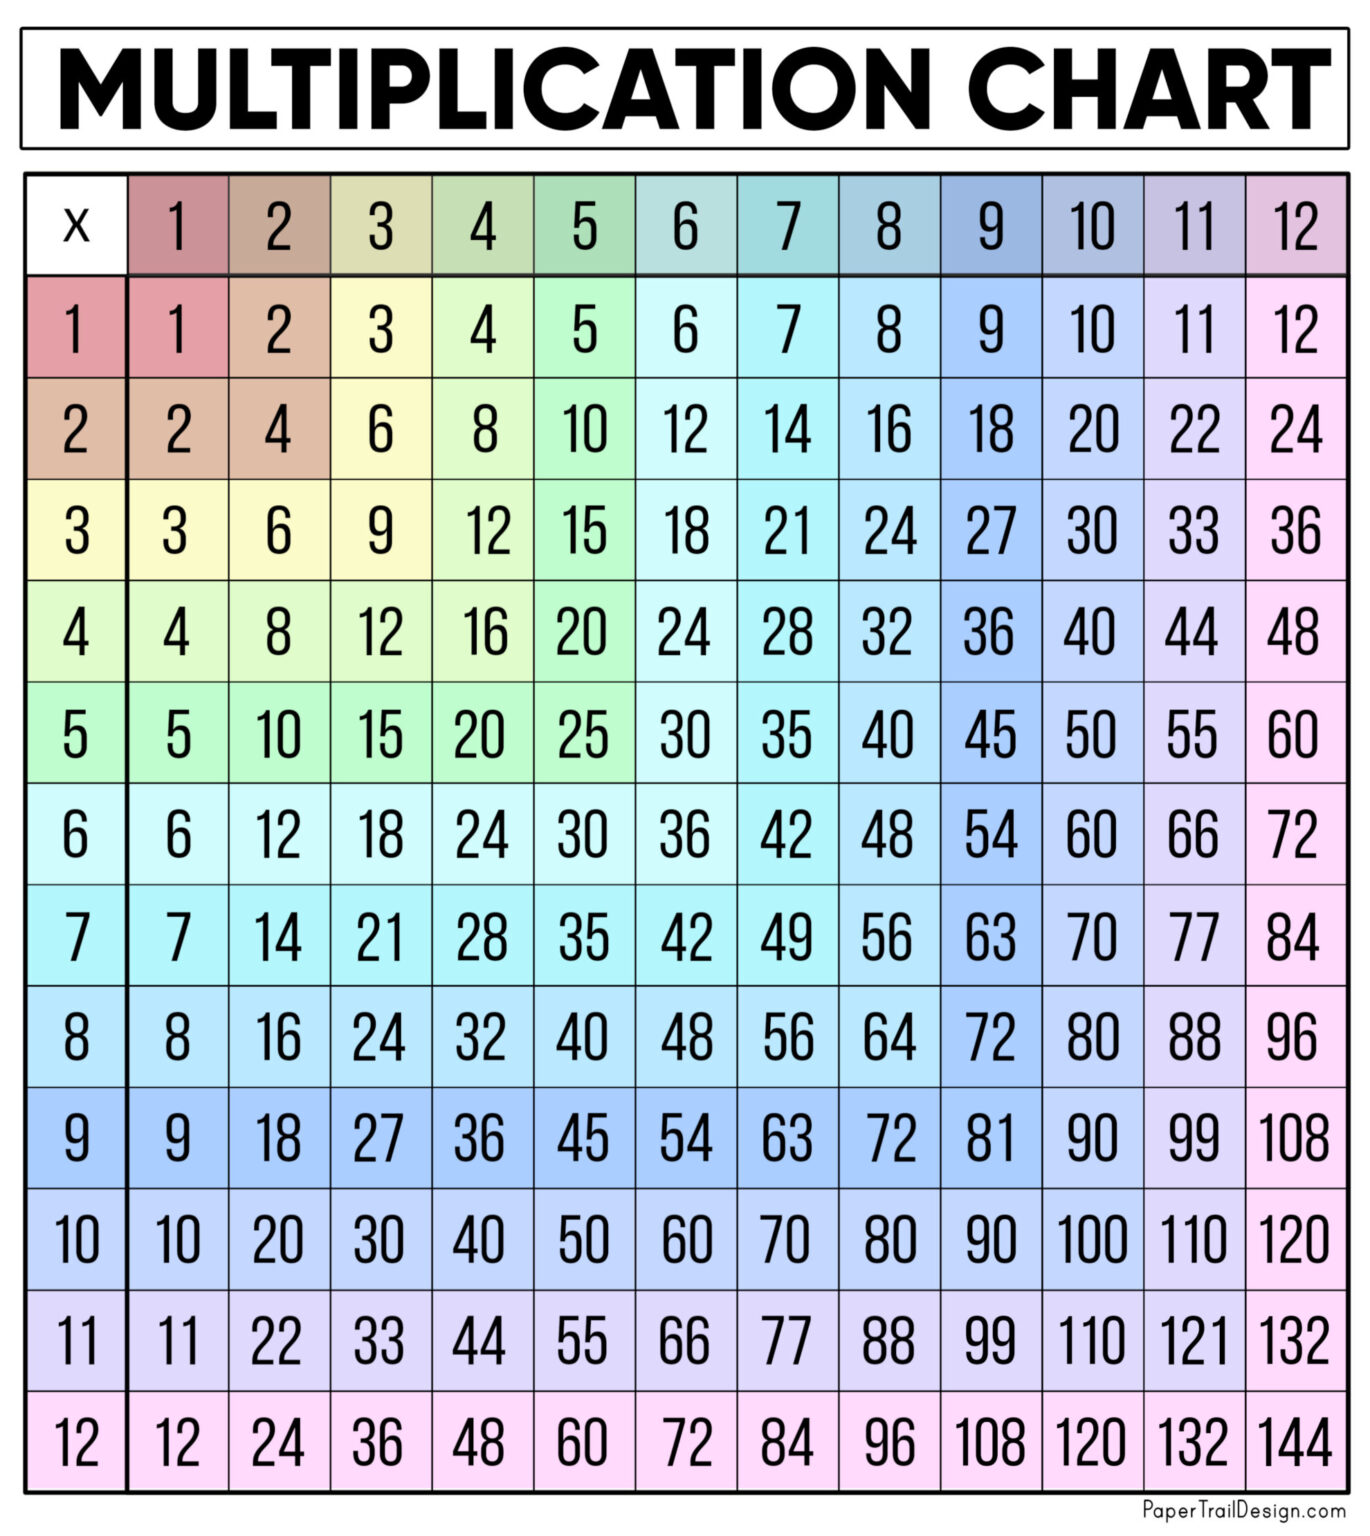 plotlyjs print multiple charts